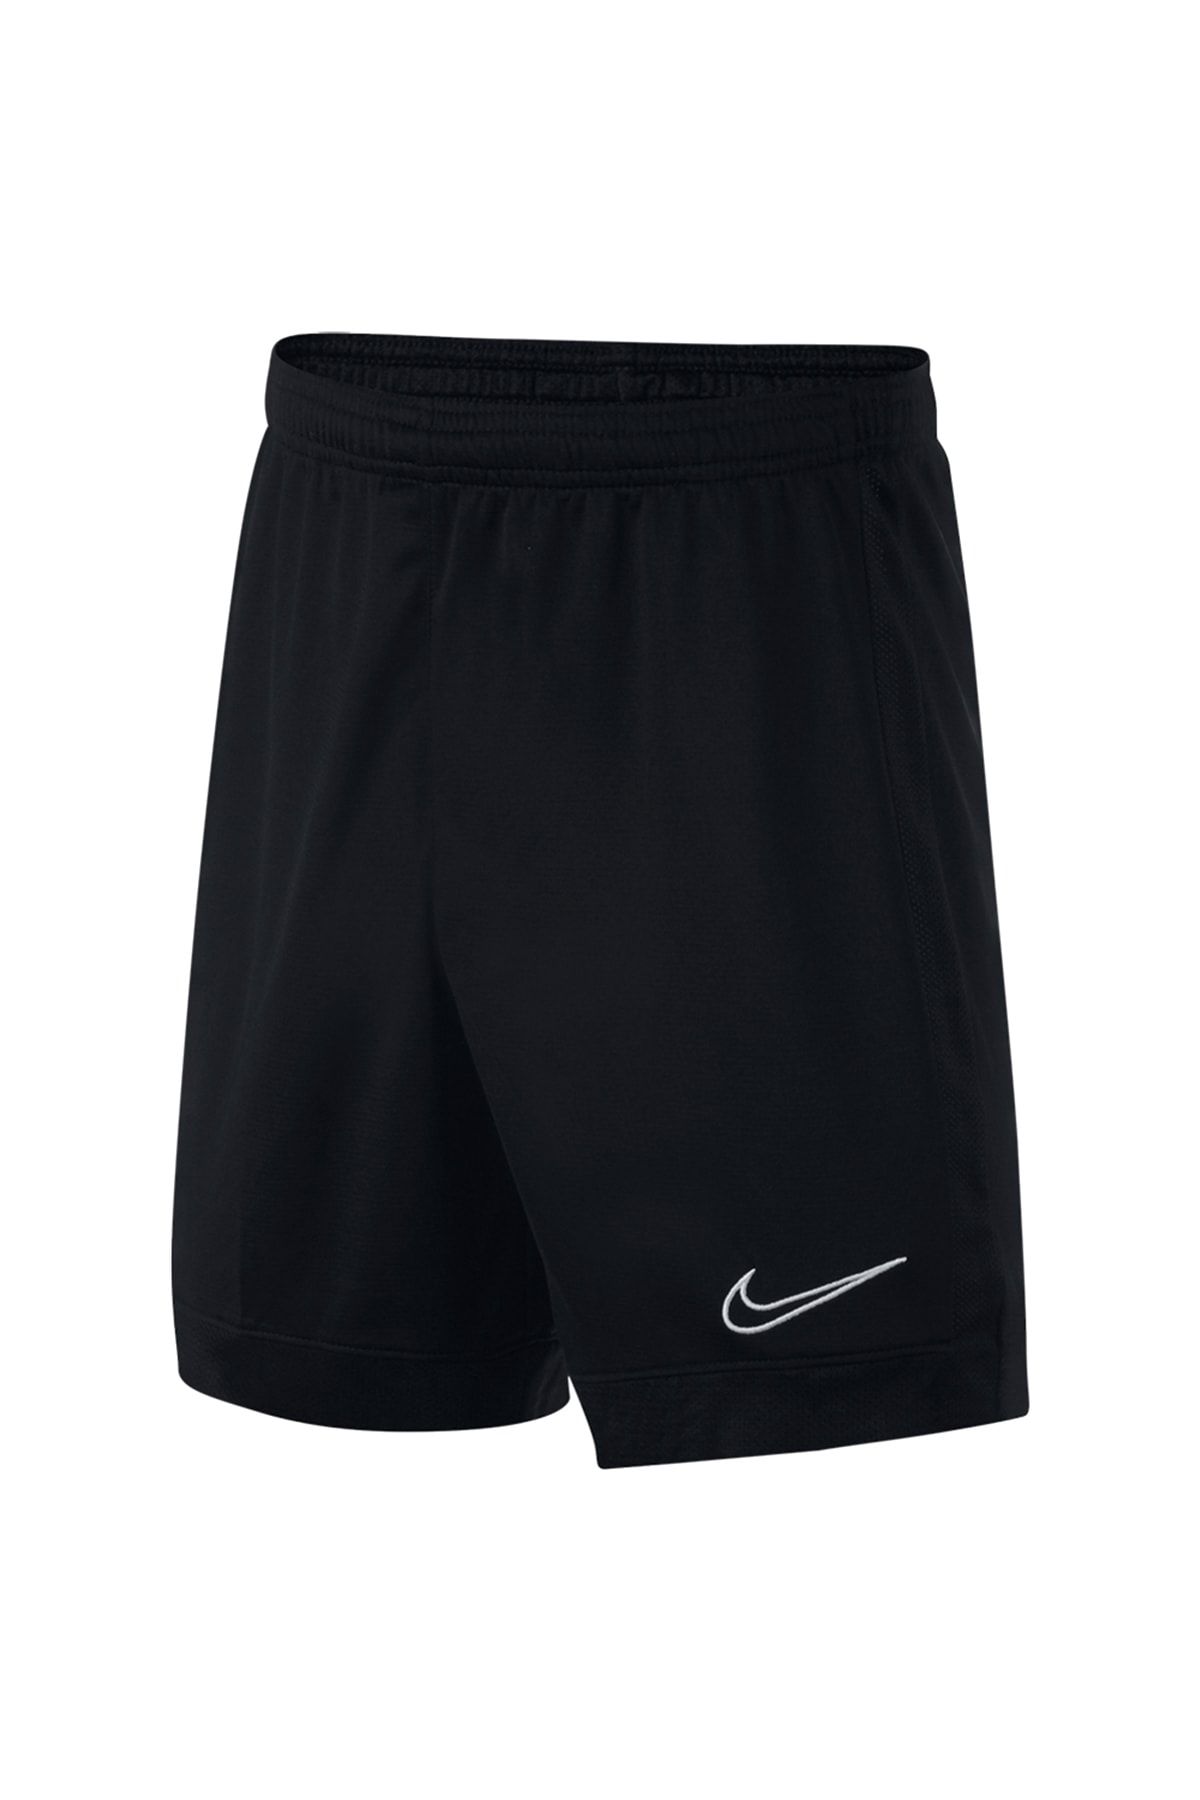 Nike AO0771-015 Dri-FIT Academy Genç Çocuk Futbol Şortu